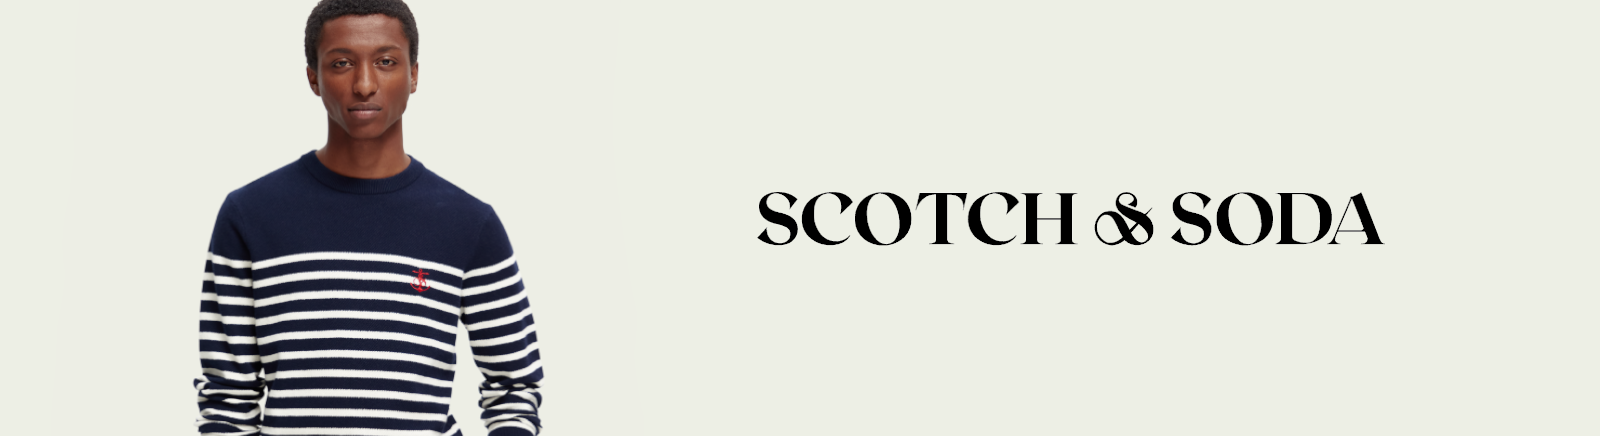 Scotch & Soda Damenschuhe online kaufen im GISY Schuhe Shop